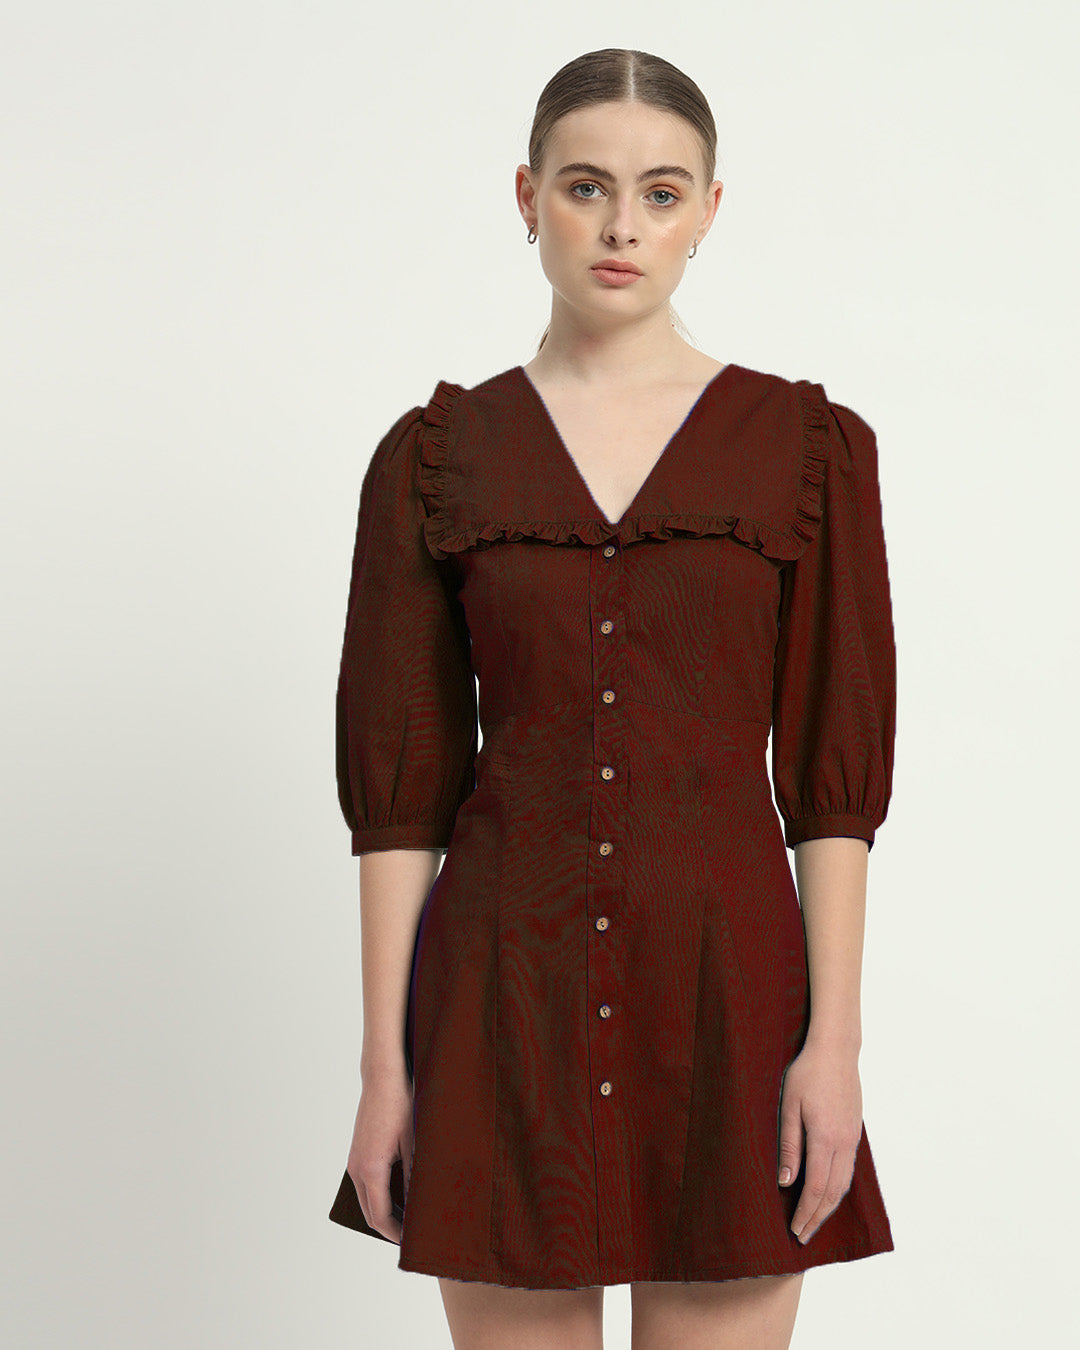 The Isabela Rouge Cotton Dress